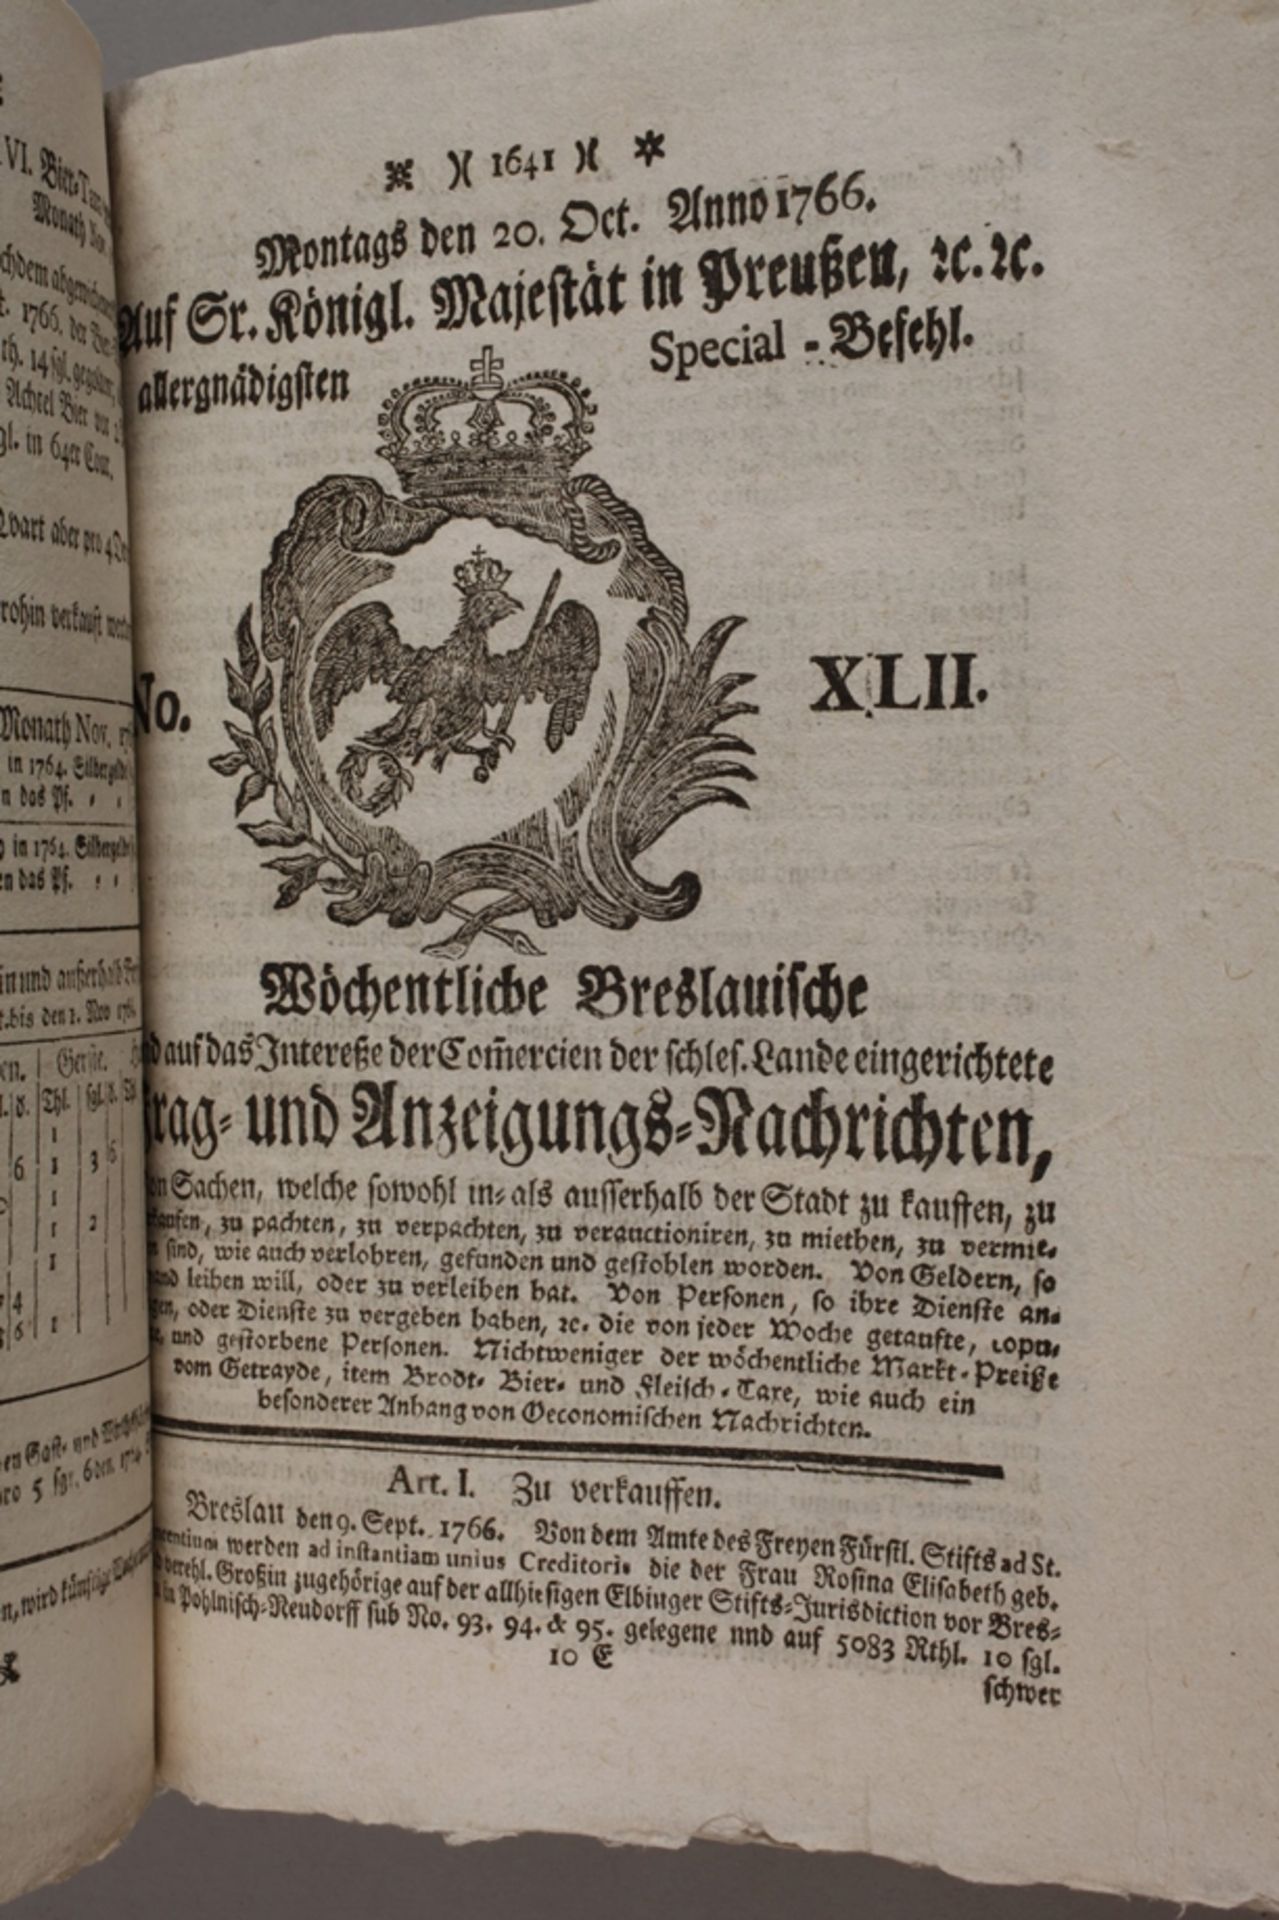 Breslau News 1766 - Image 4 of 5